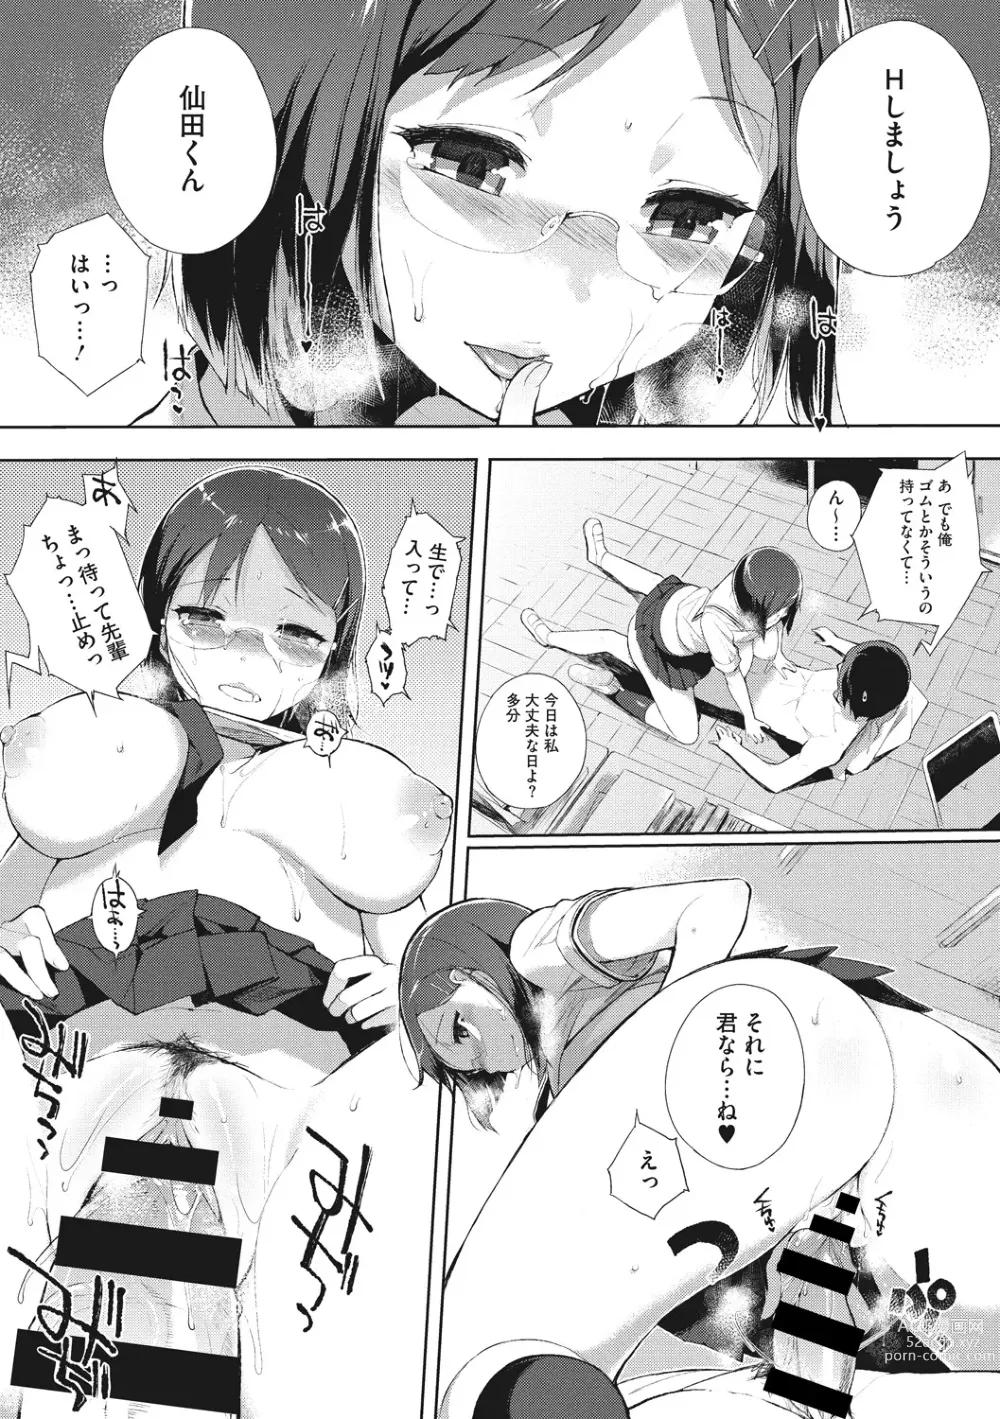 Page 185 of manga Houkago no Yuutousei